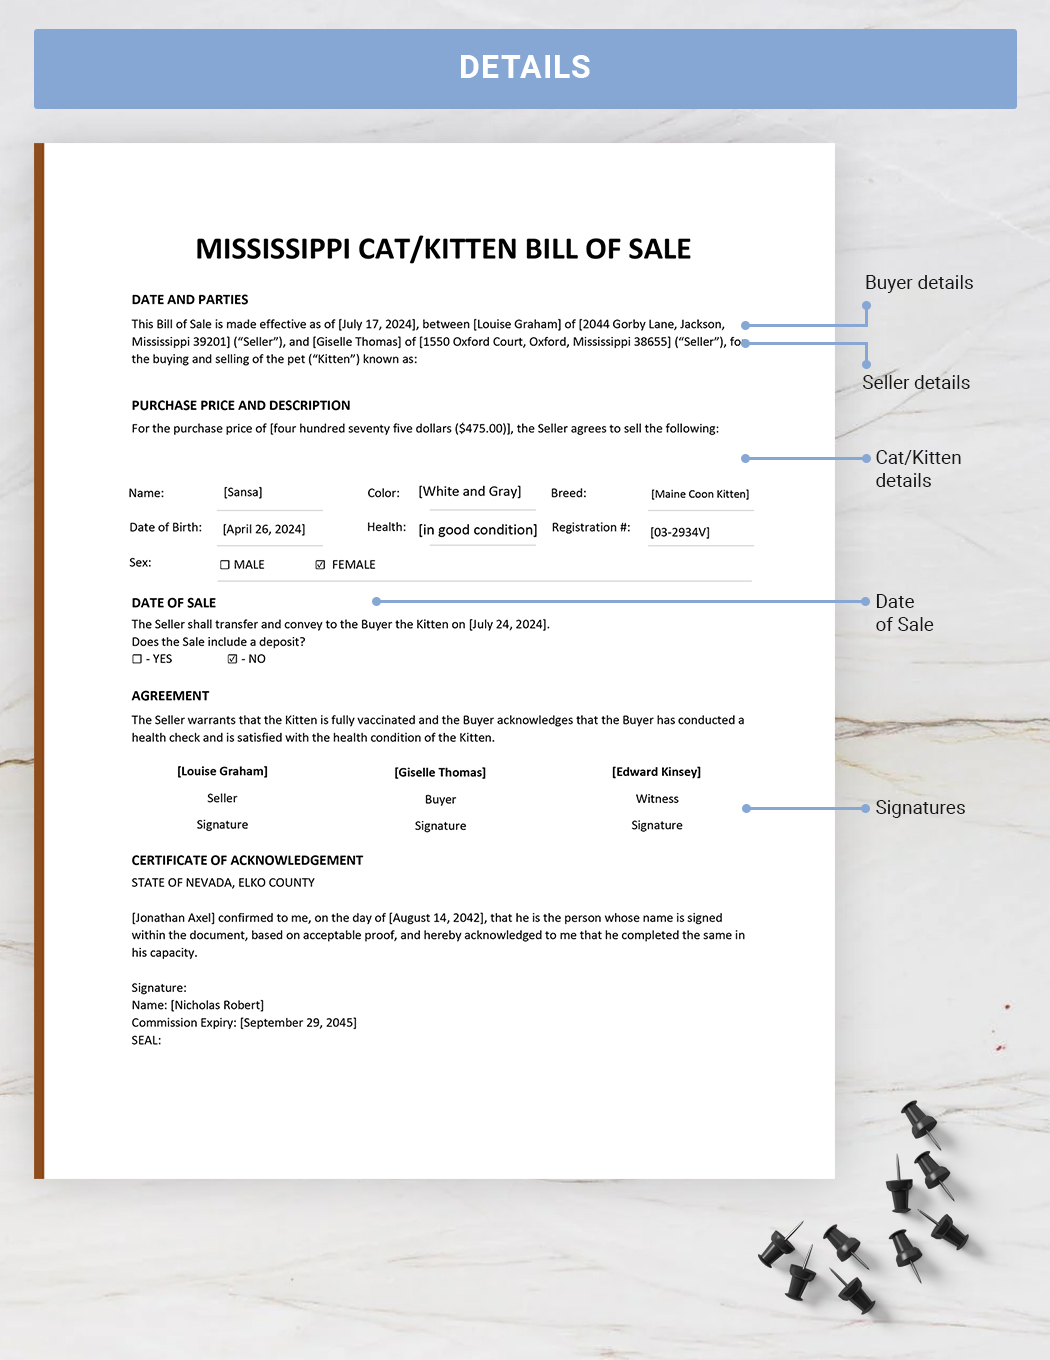 Mississippi Cat / Kitten Bill of Sale Template